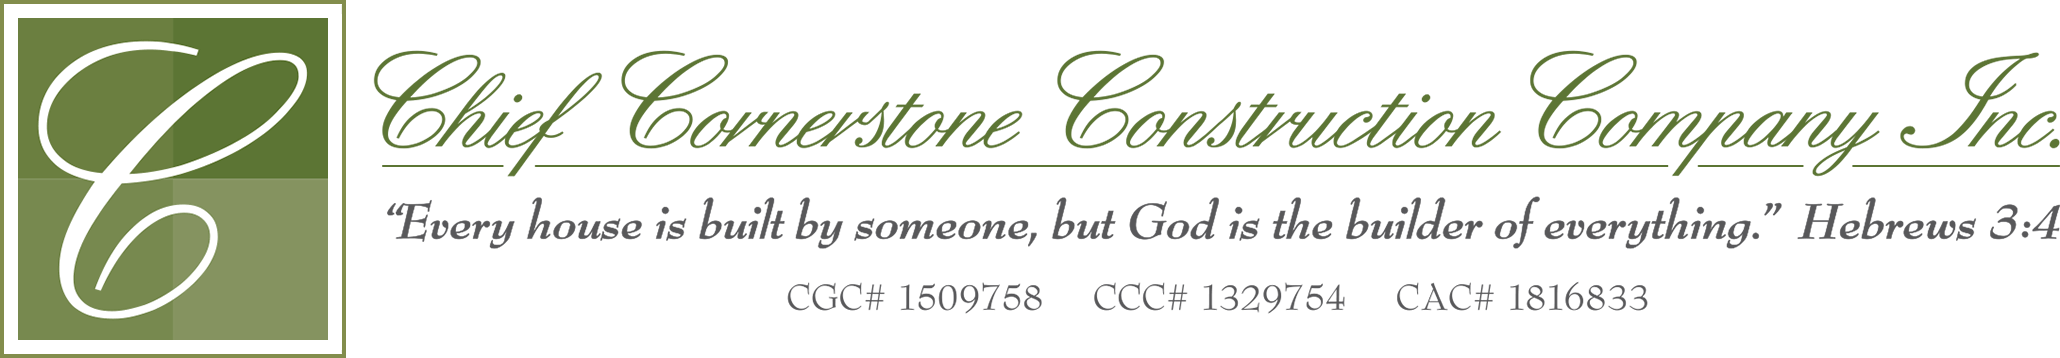 Chief Cornerstone Construction Company